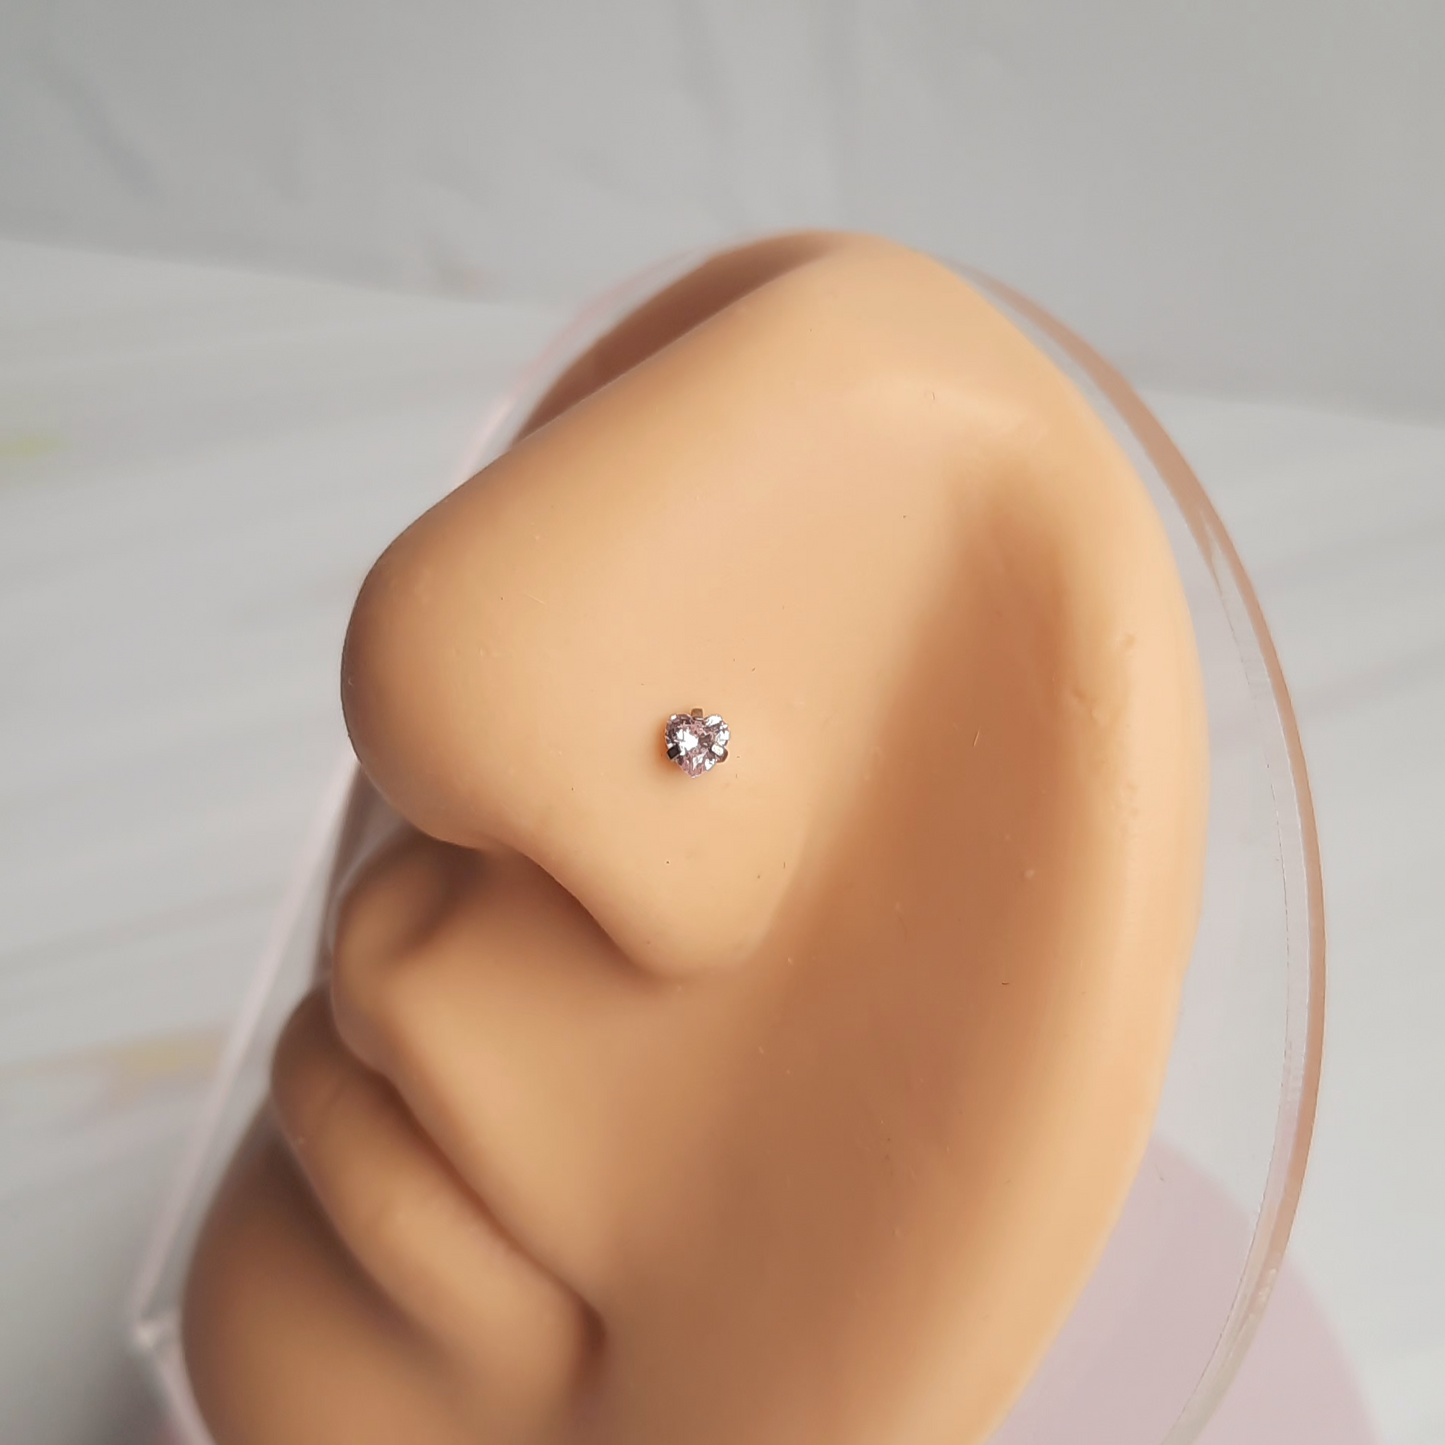 Piercing Mini Corazón - Nostril - 3mm